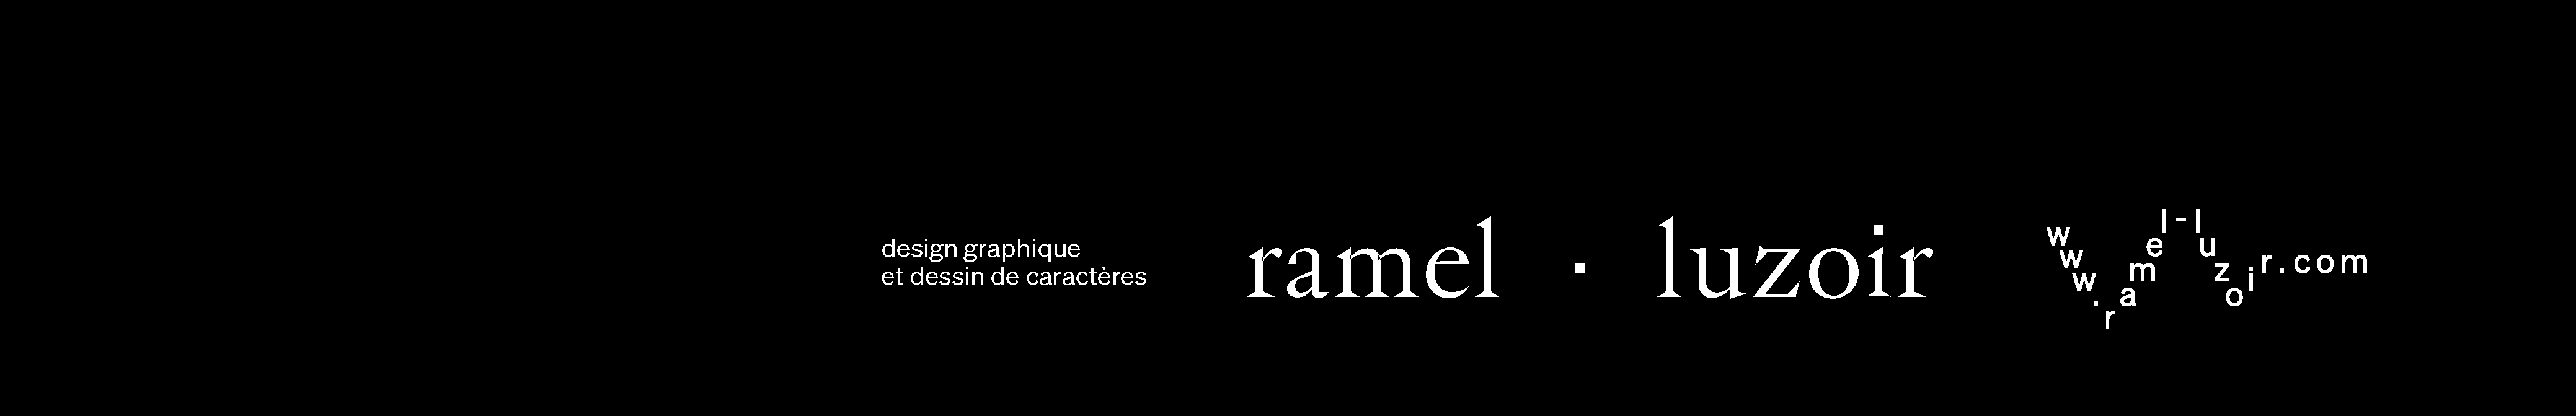 ramel · luzoir's profile banner